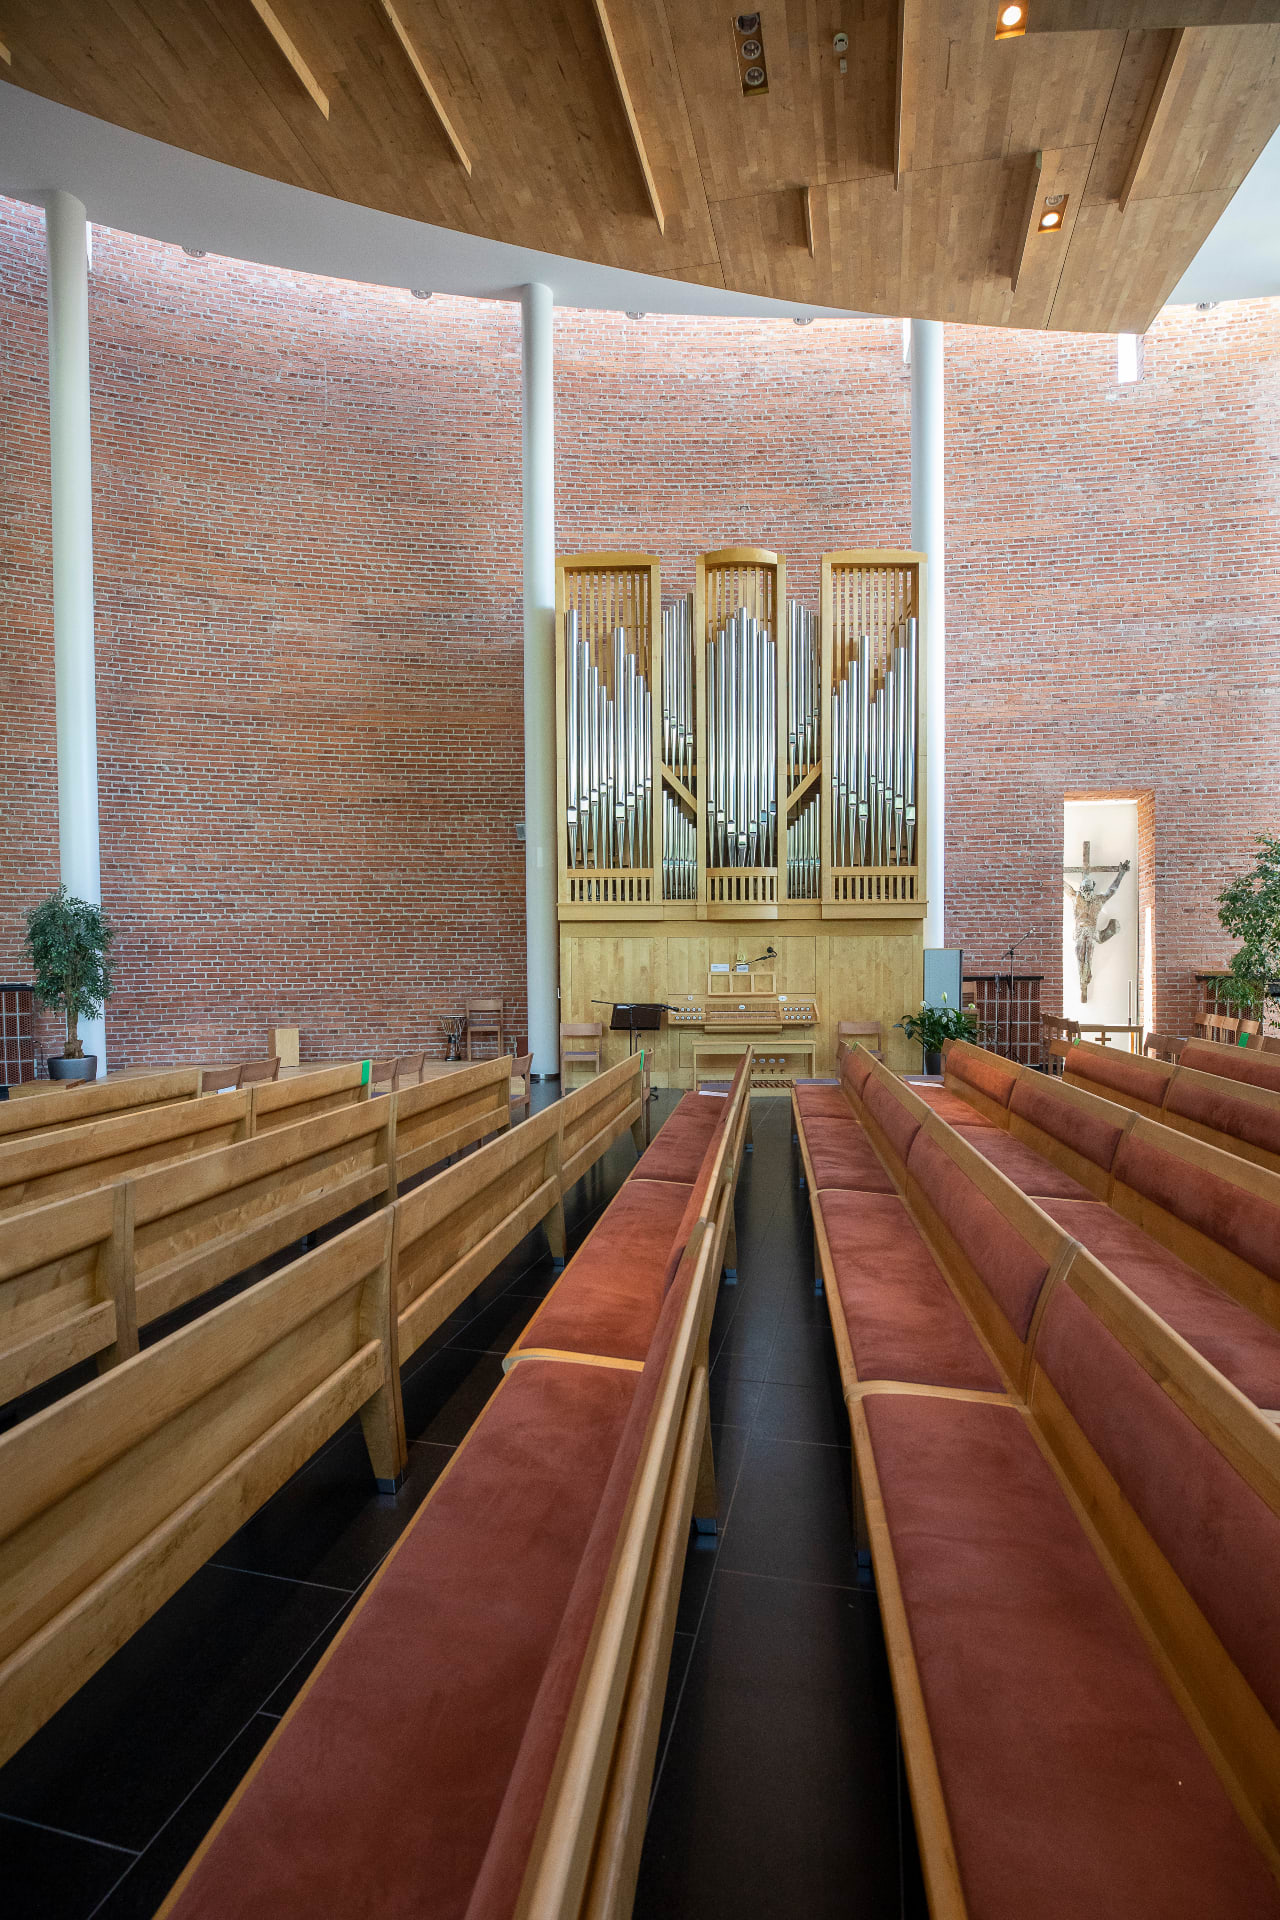 Aitolahti church organ and seats.